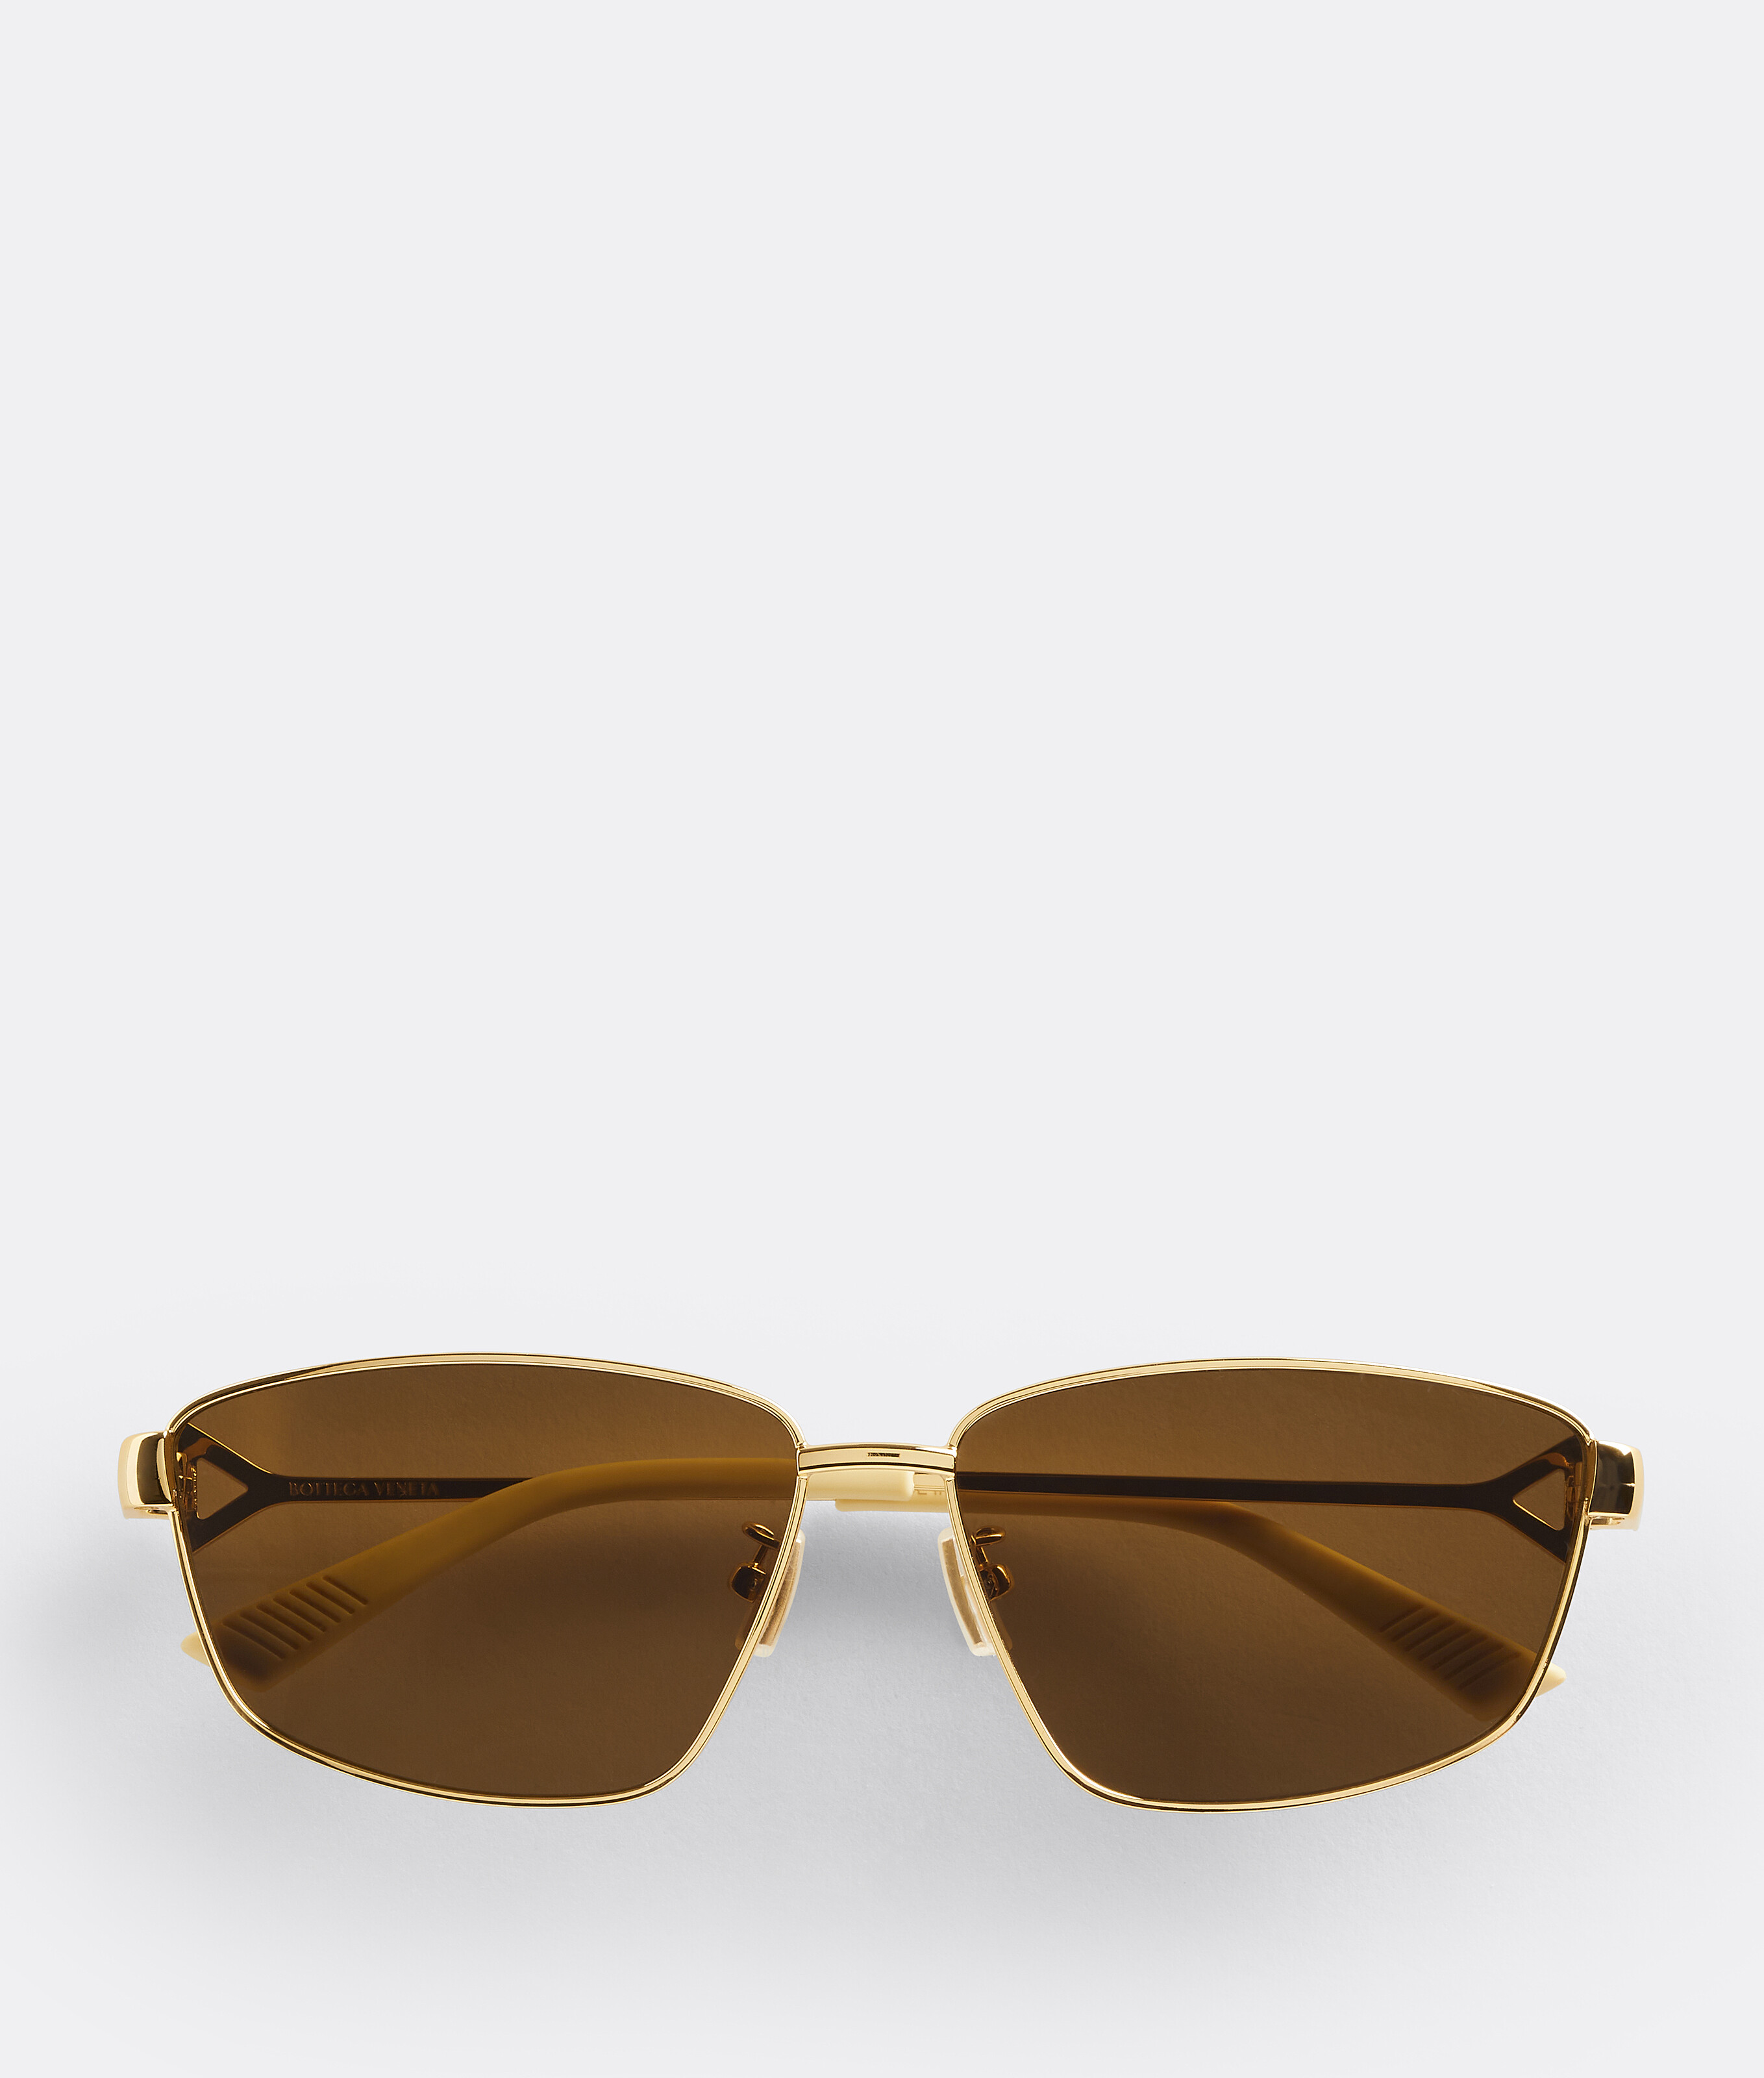 Bottega Veneta® Turn Square Sunglasses in Gold / Brown. Shop online now.